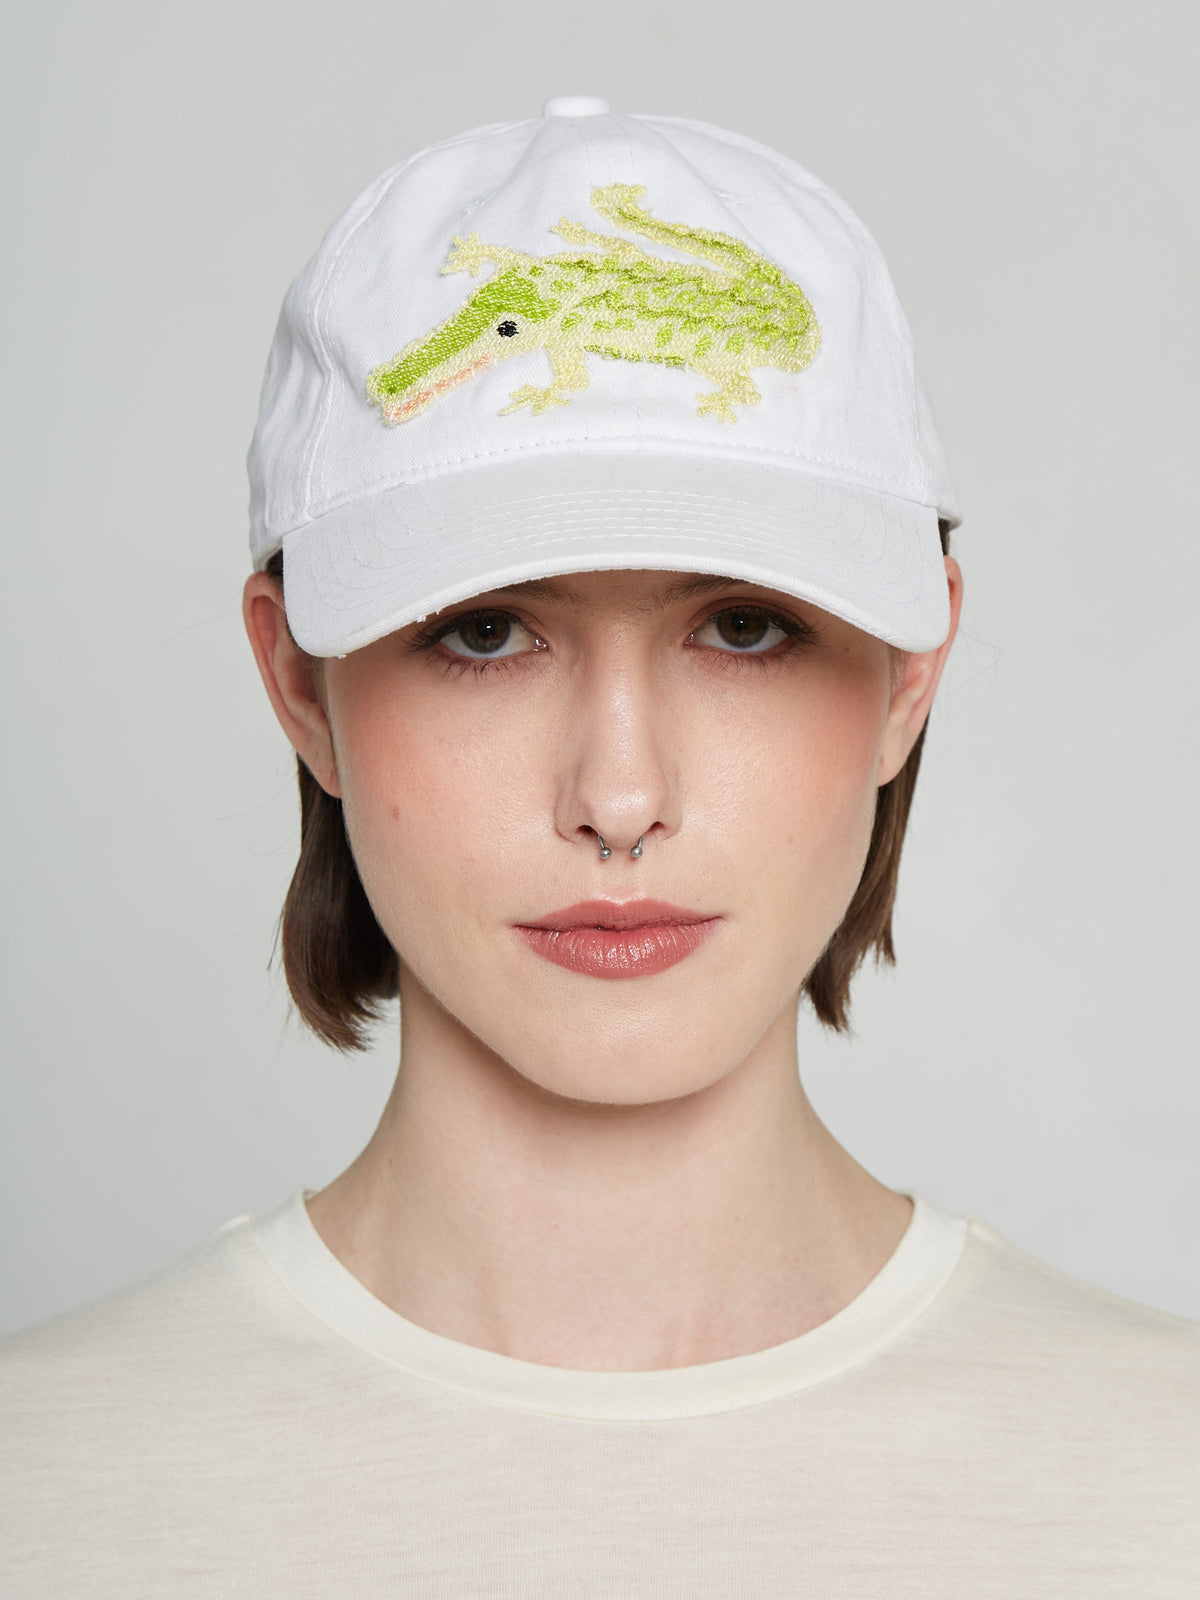 Embroidered Croc Cap